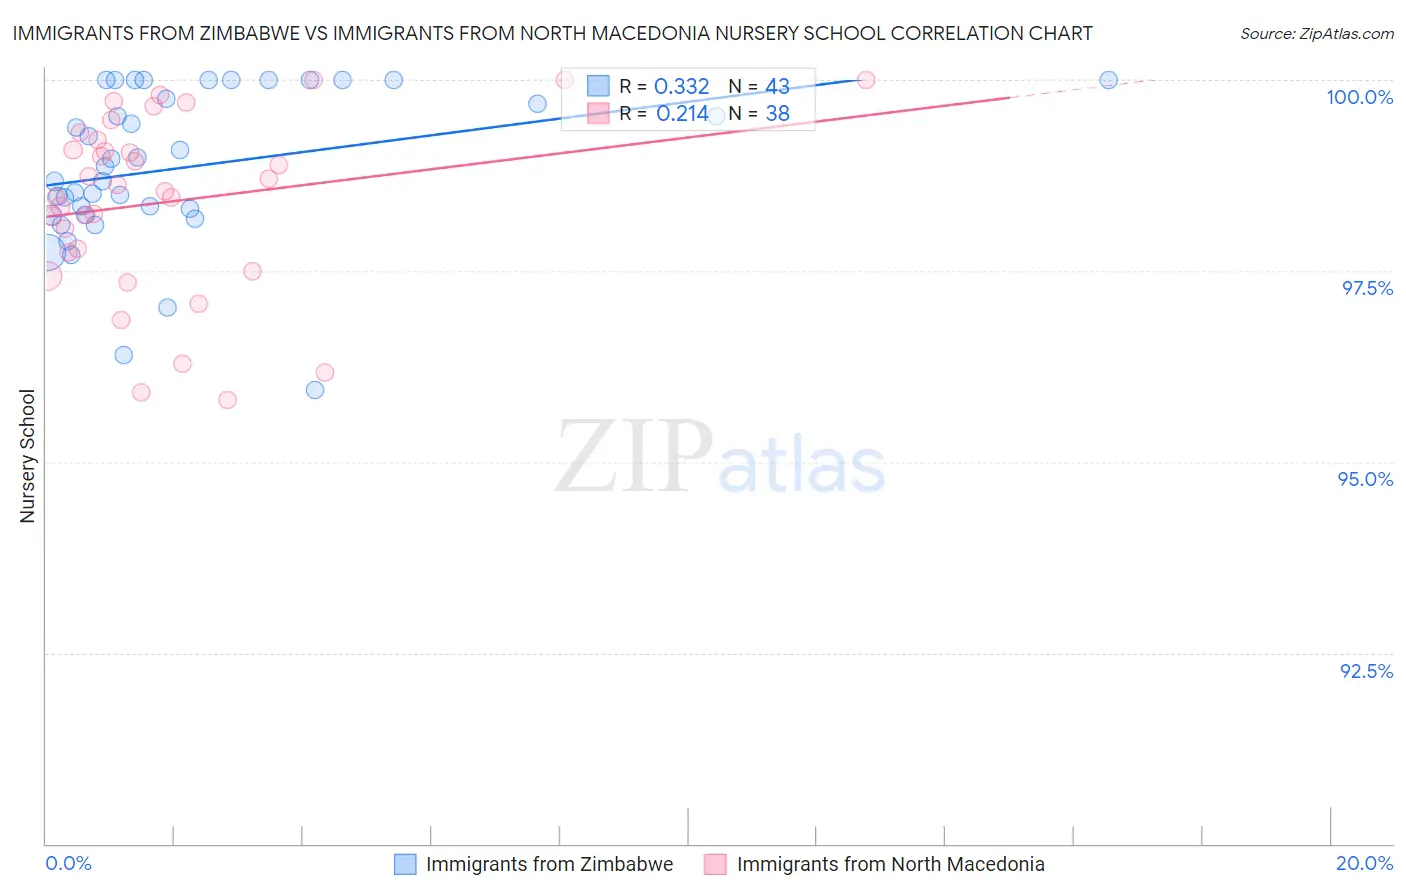 Immigrants from Zimbabwe vs Immigrants from North Macedonia Nursery School